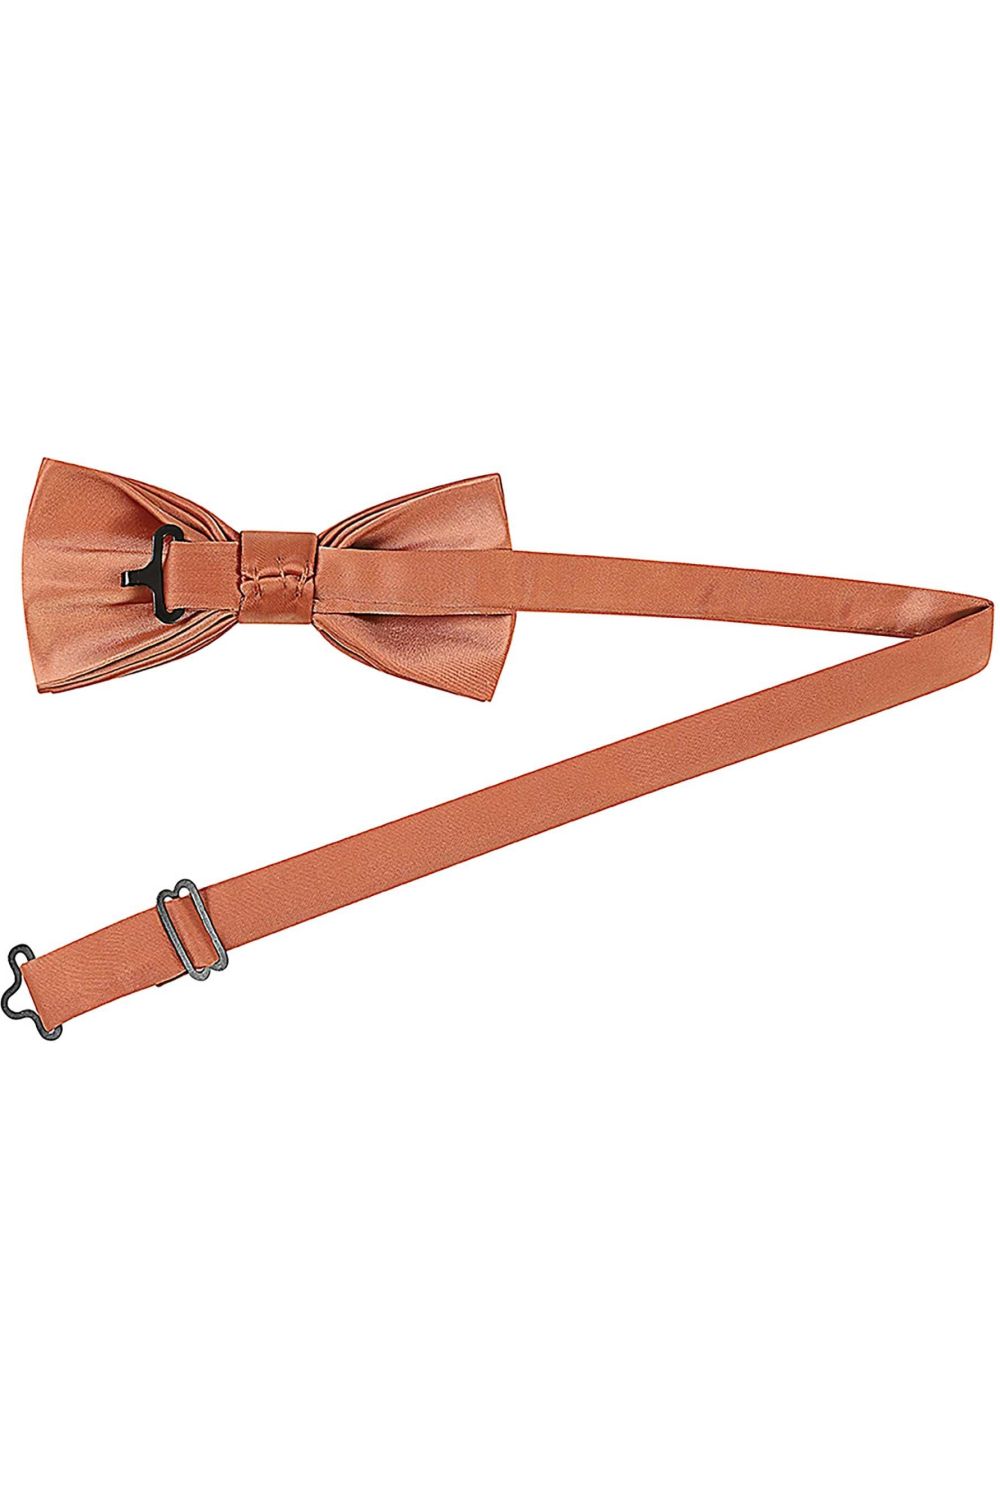 Plain copper satin classic mens bow tie